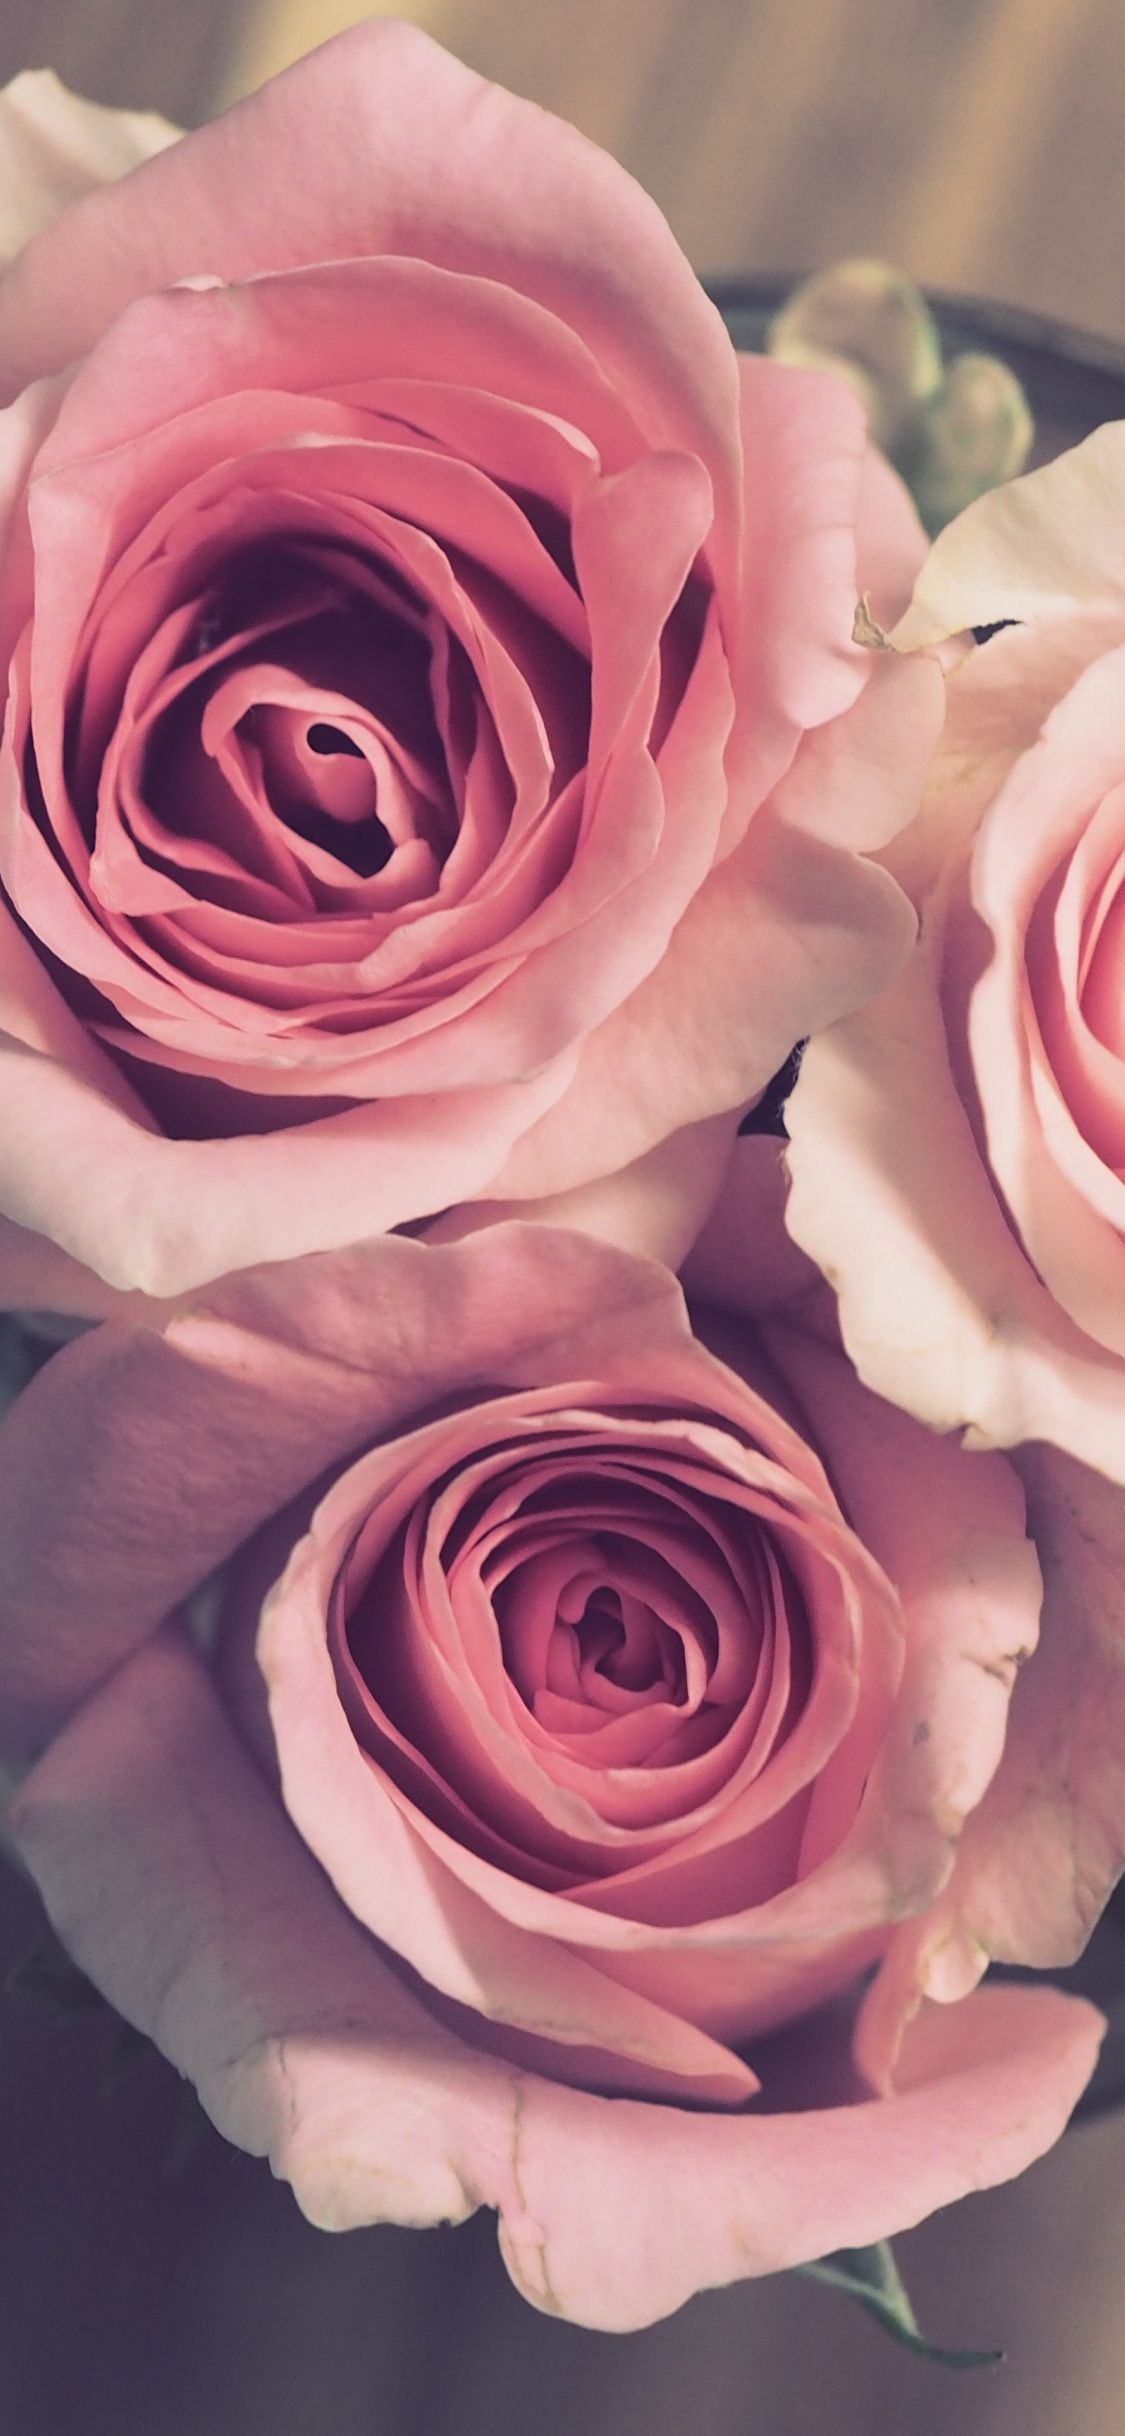 Download 1125x2436 wallpaper bouquet, pink roses, bloom, iphone x